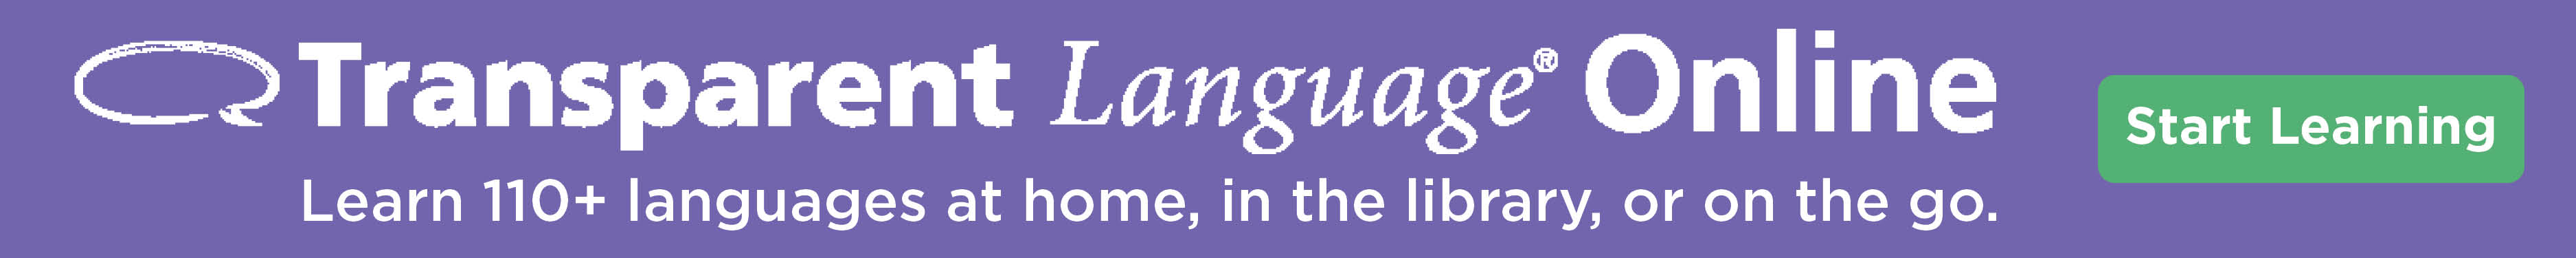 Transparent Languages Online Banner